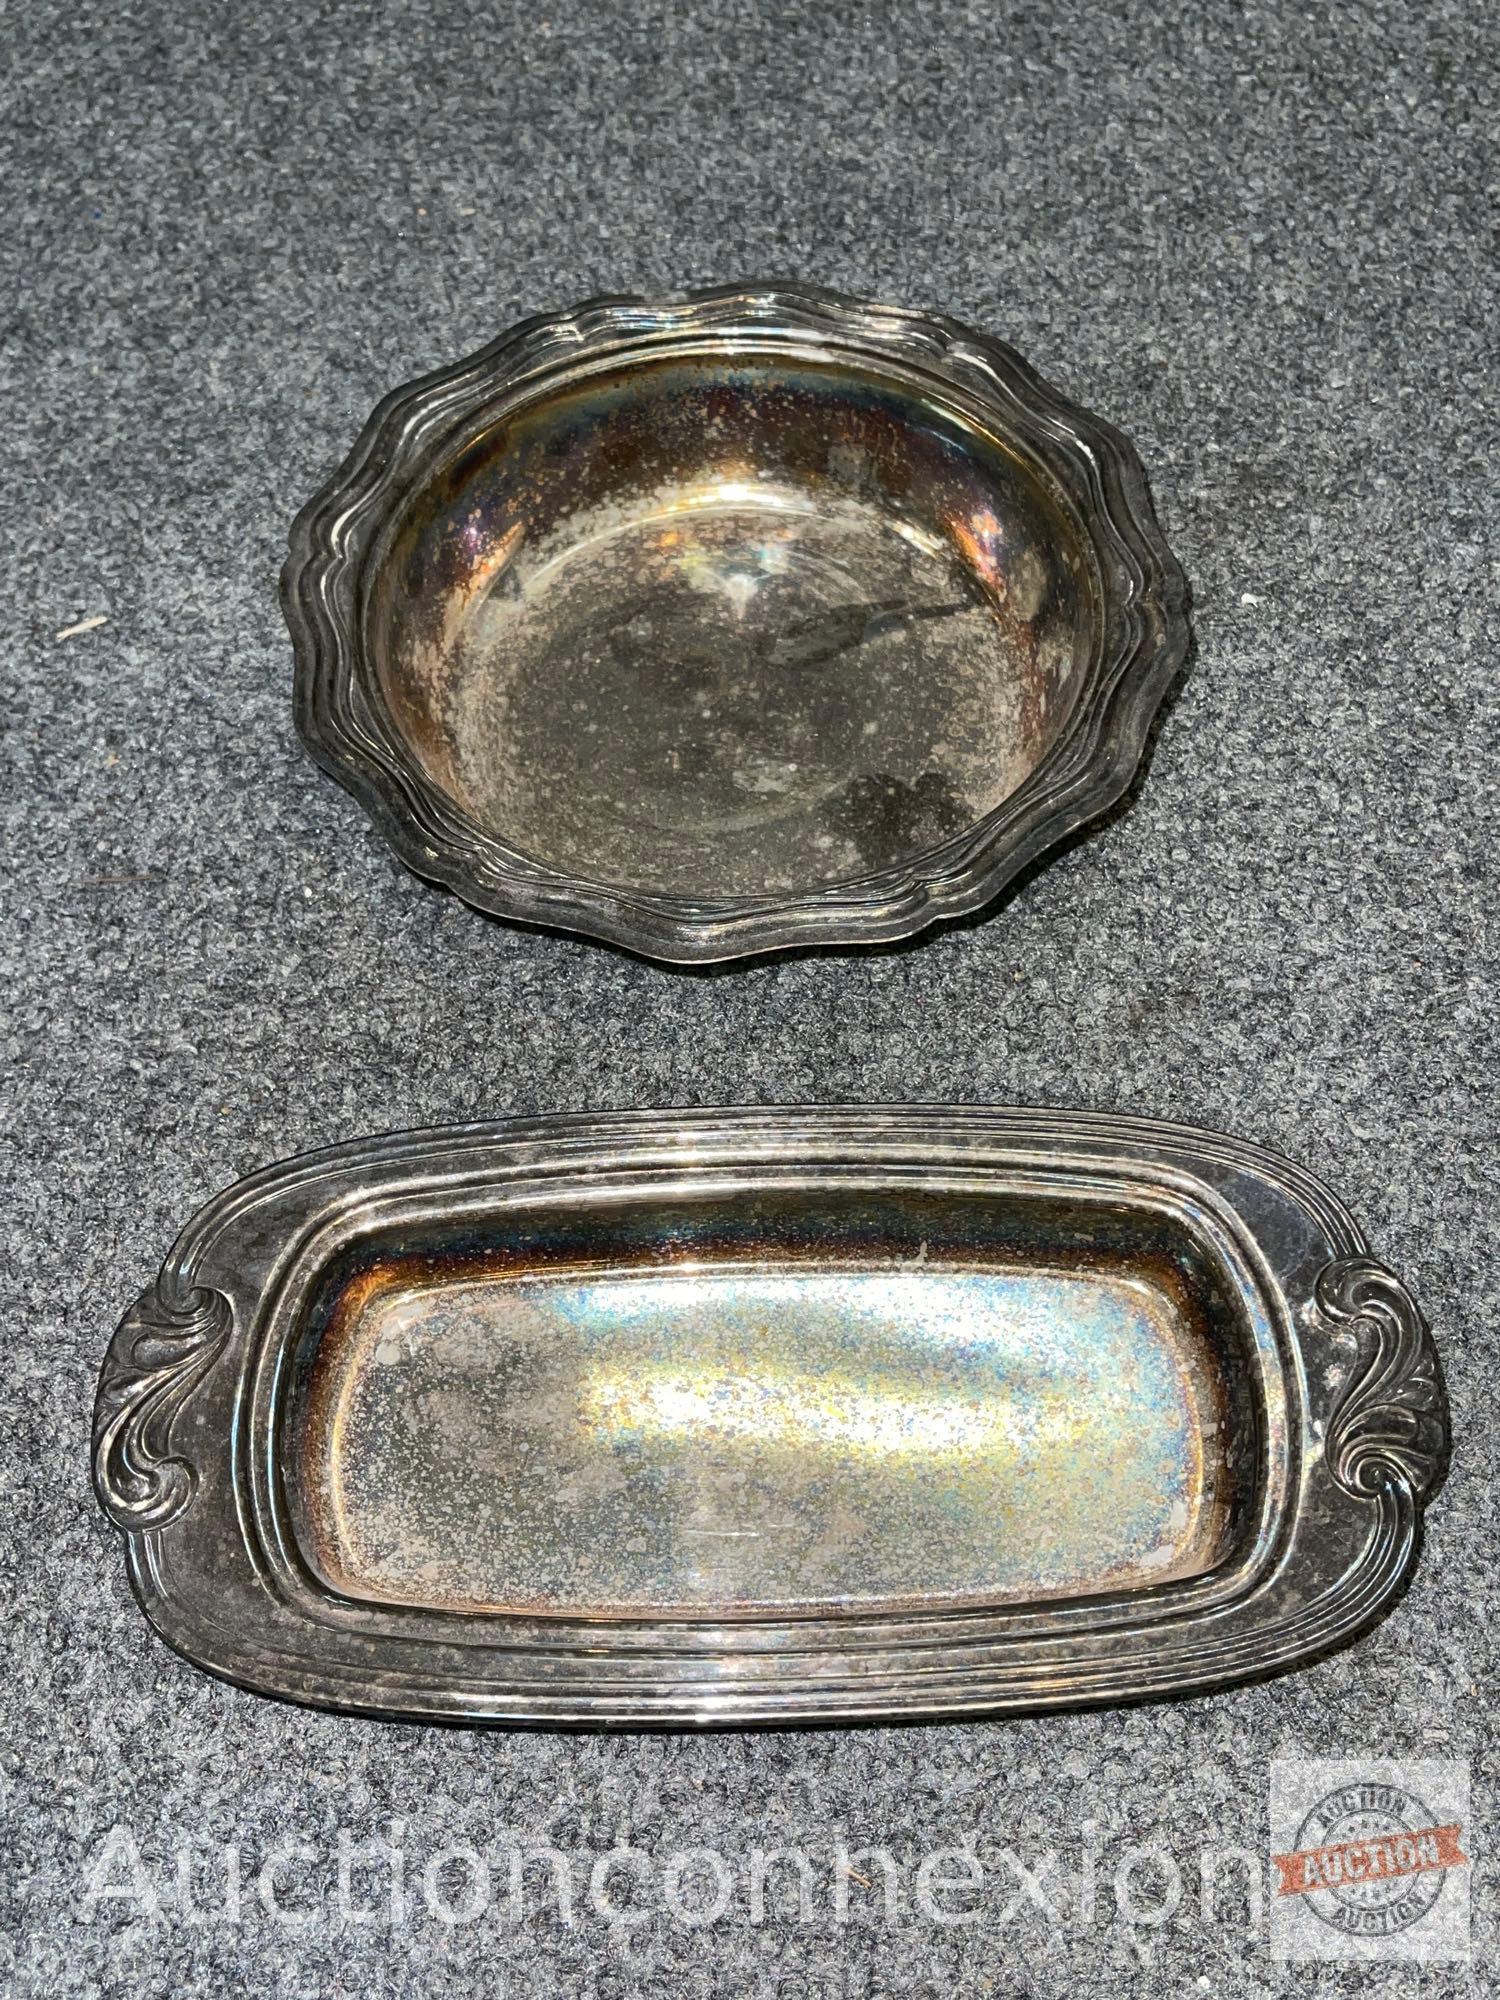 Metal ware - Vintage misc. serving ware